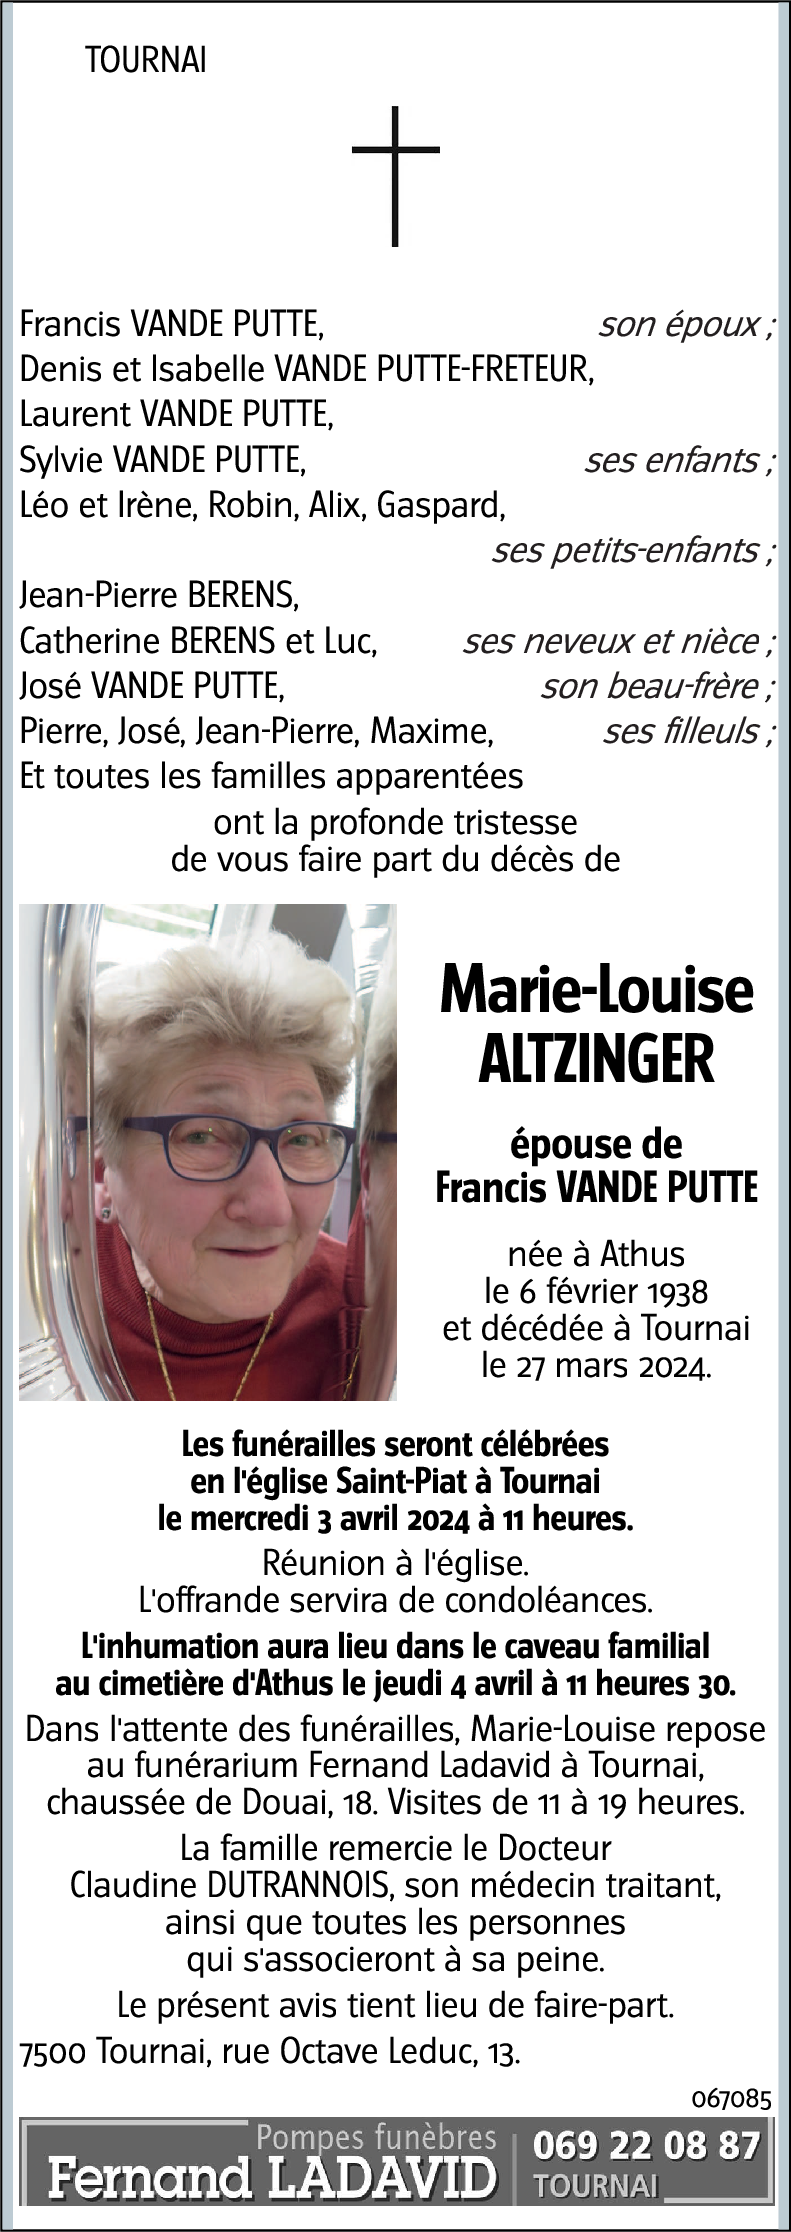 Marie-Louise ALTZINGER